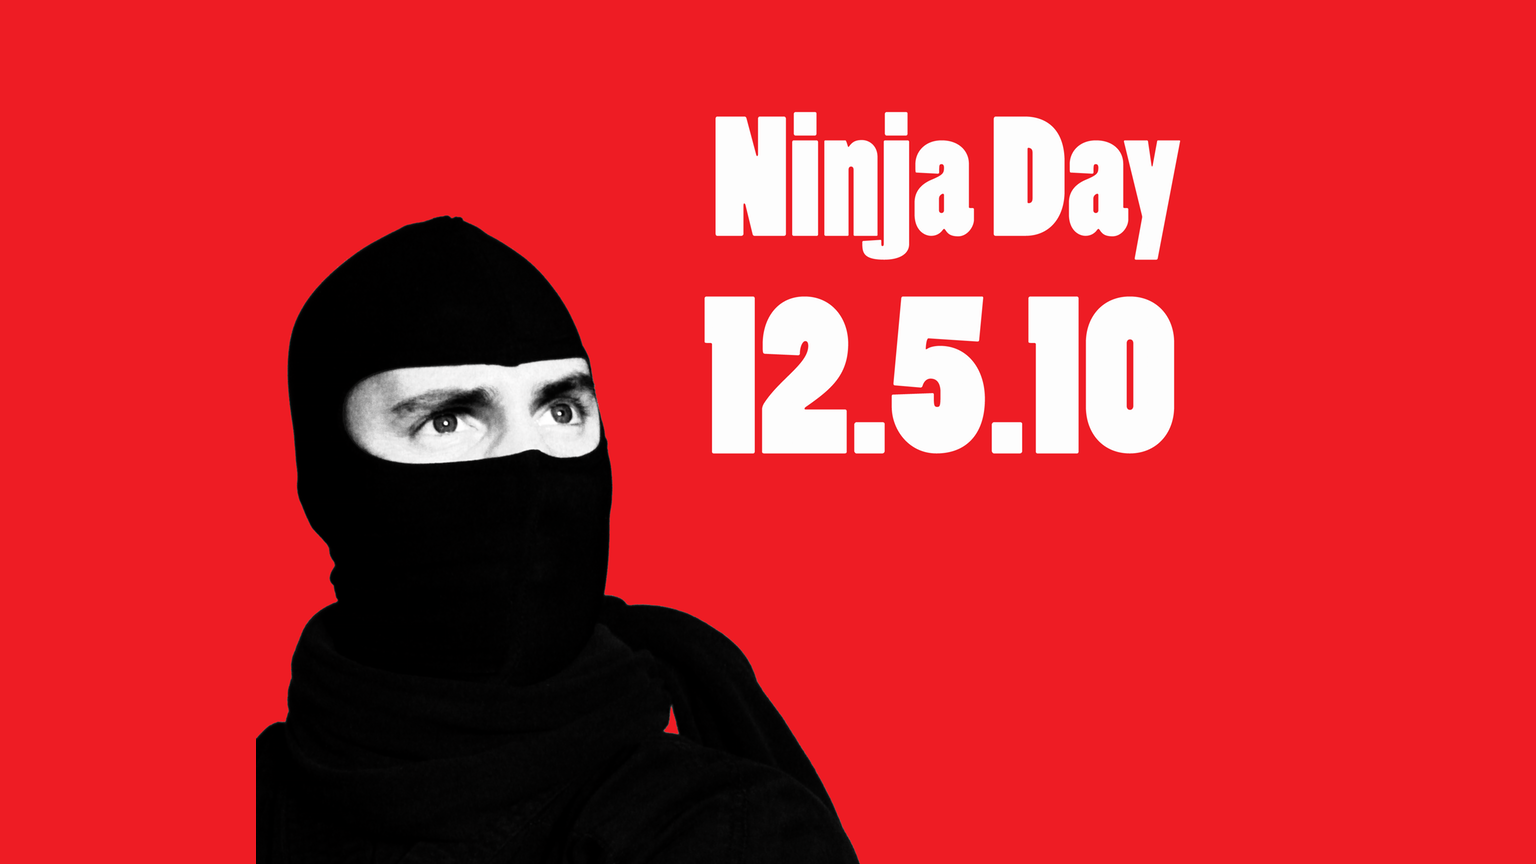 International Ninja Day (December 5th)